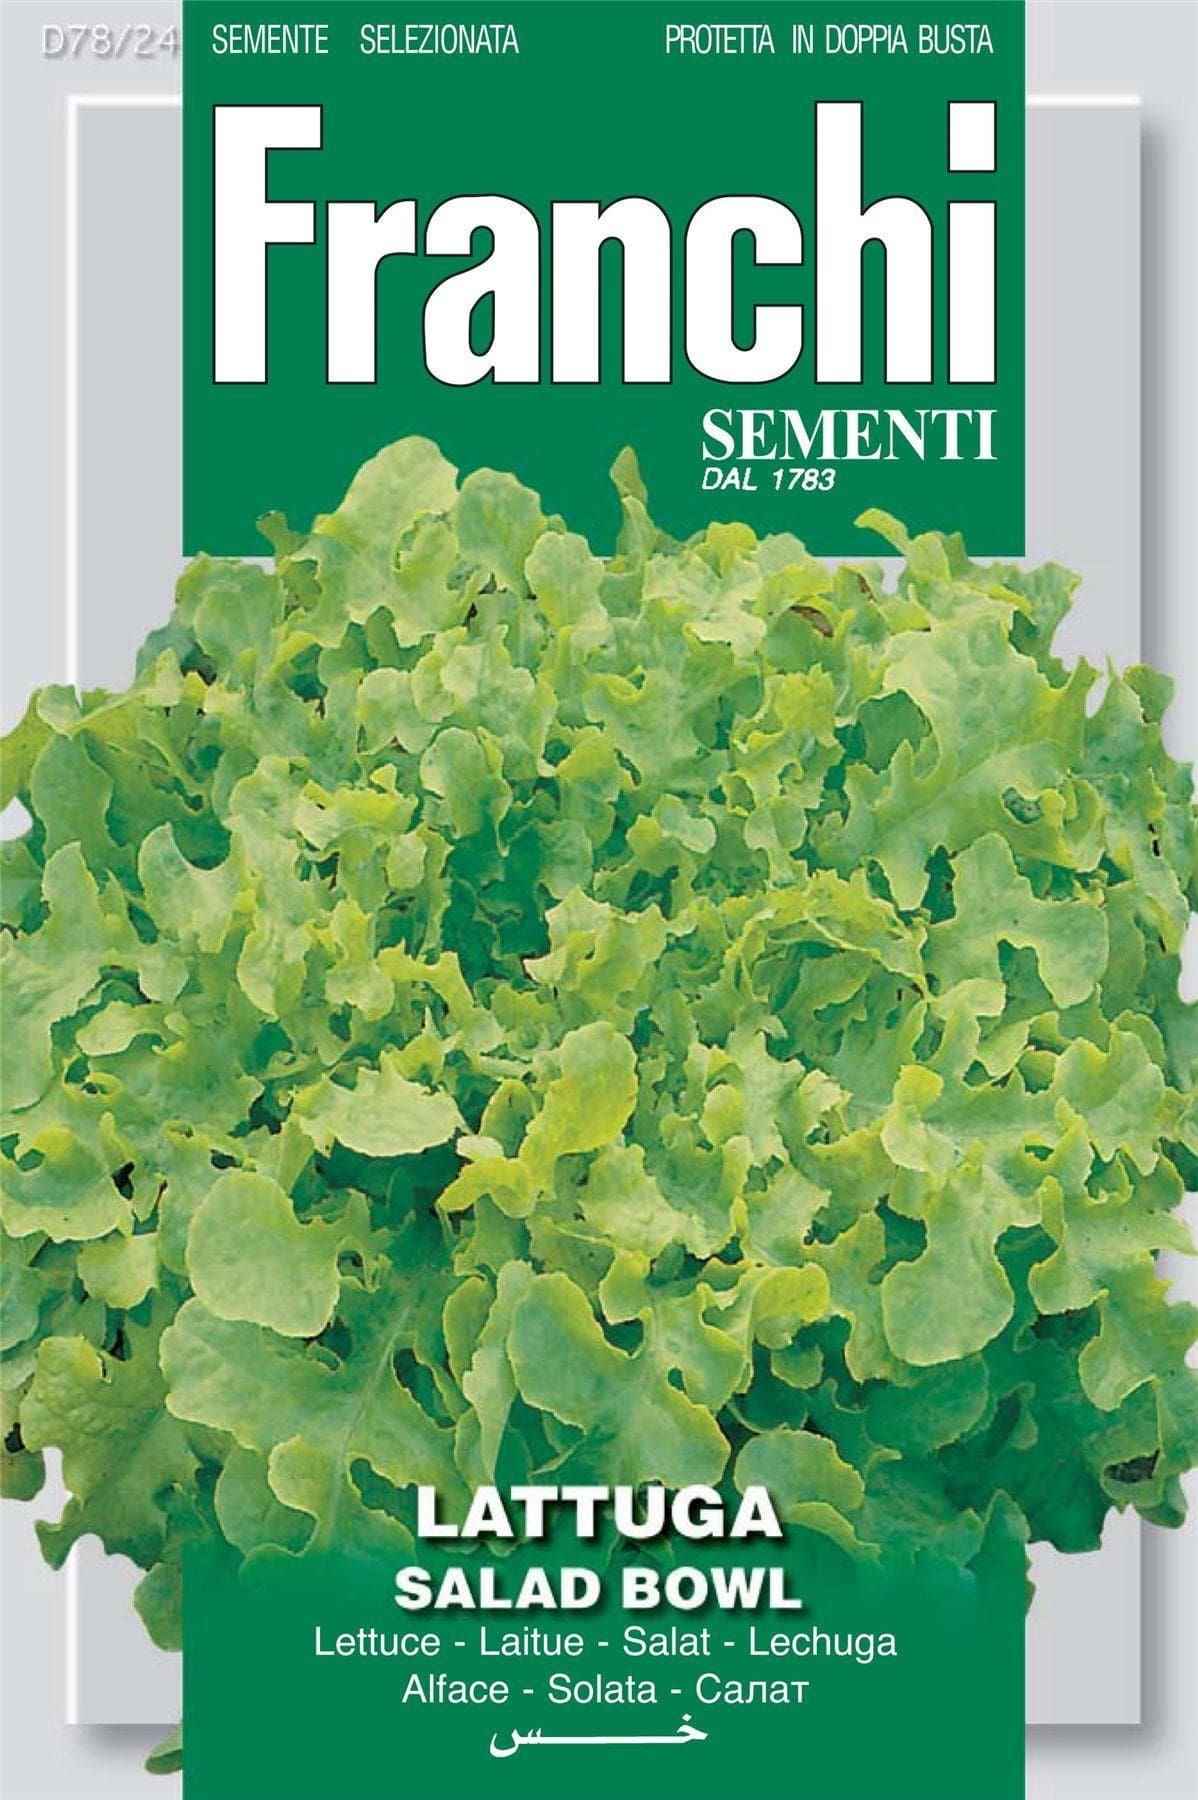 Franchi Seeds of Italy - DBO 78/24 - Lettuce - Salad Bowl - Seeds